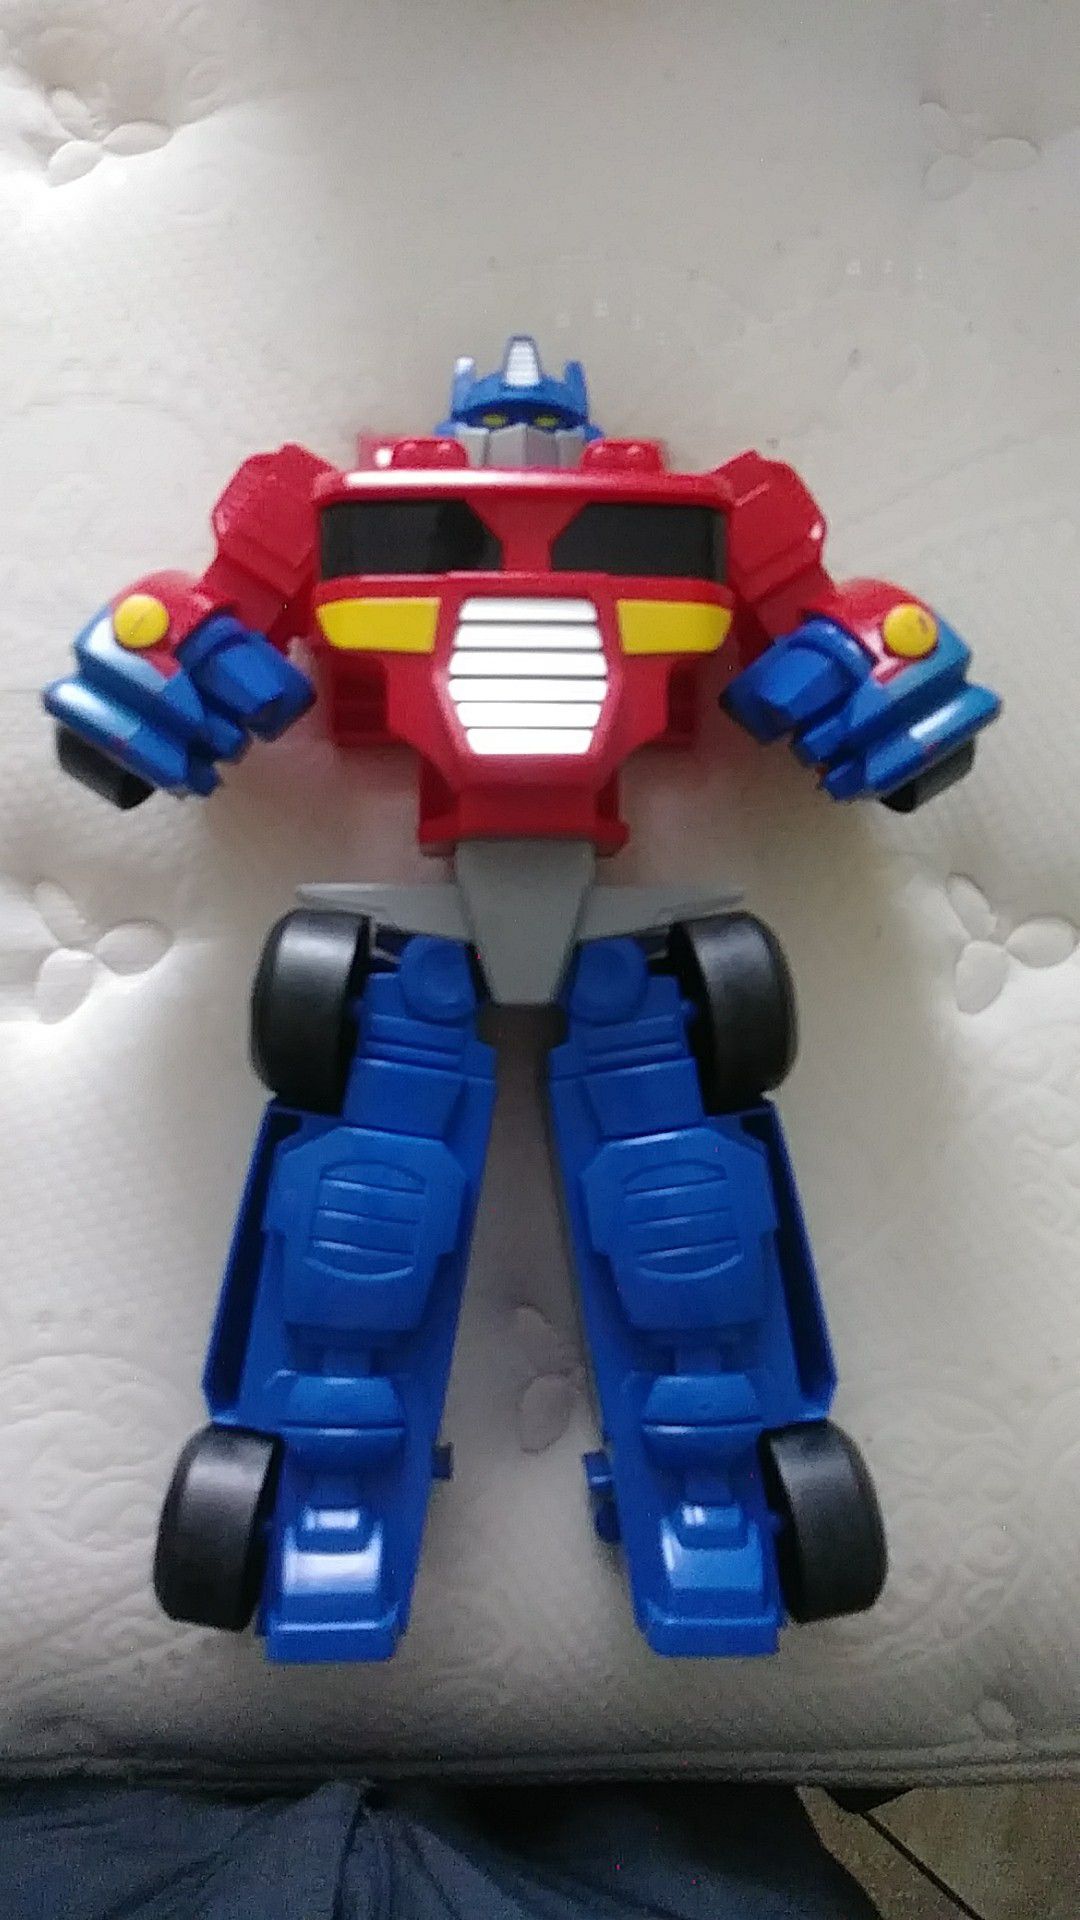 Big collectible optimus prime transformer toy